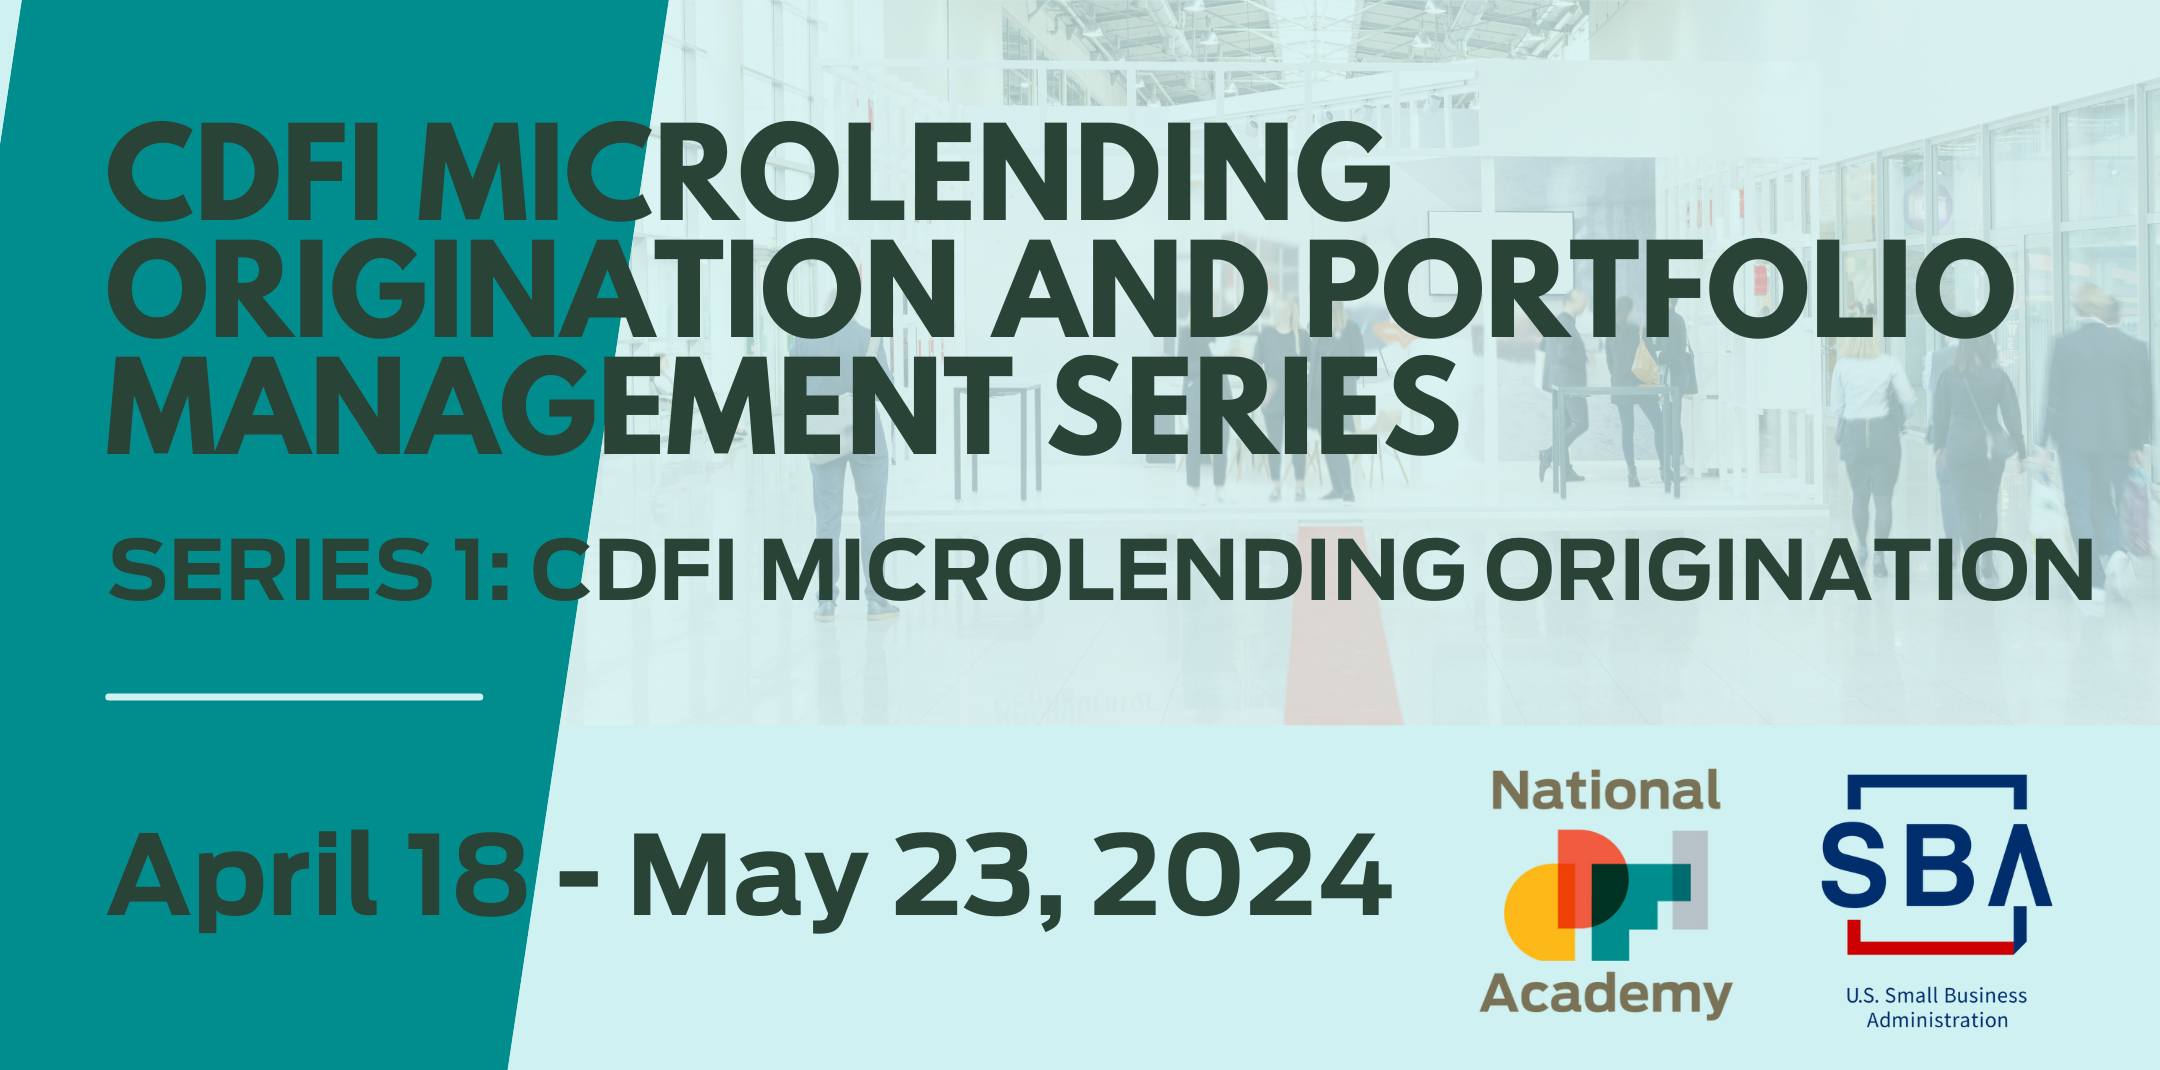 Part 1: CDFI Microlending Origination and Portfolio Management Series